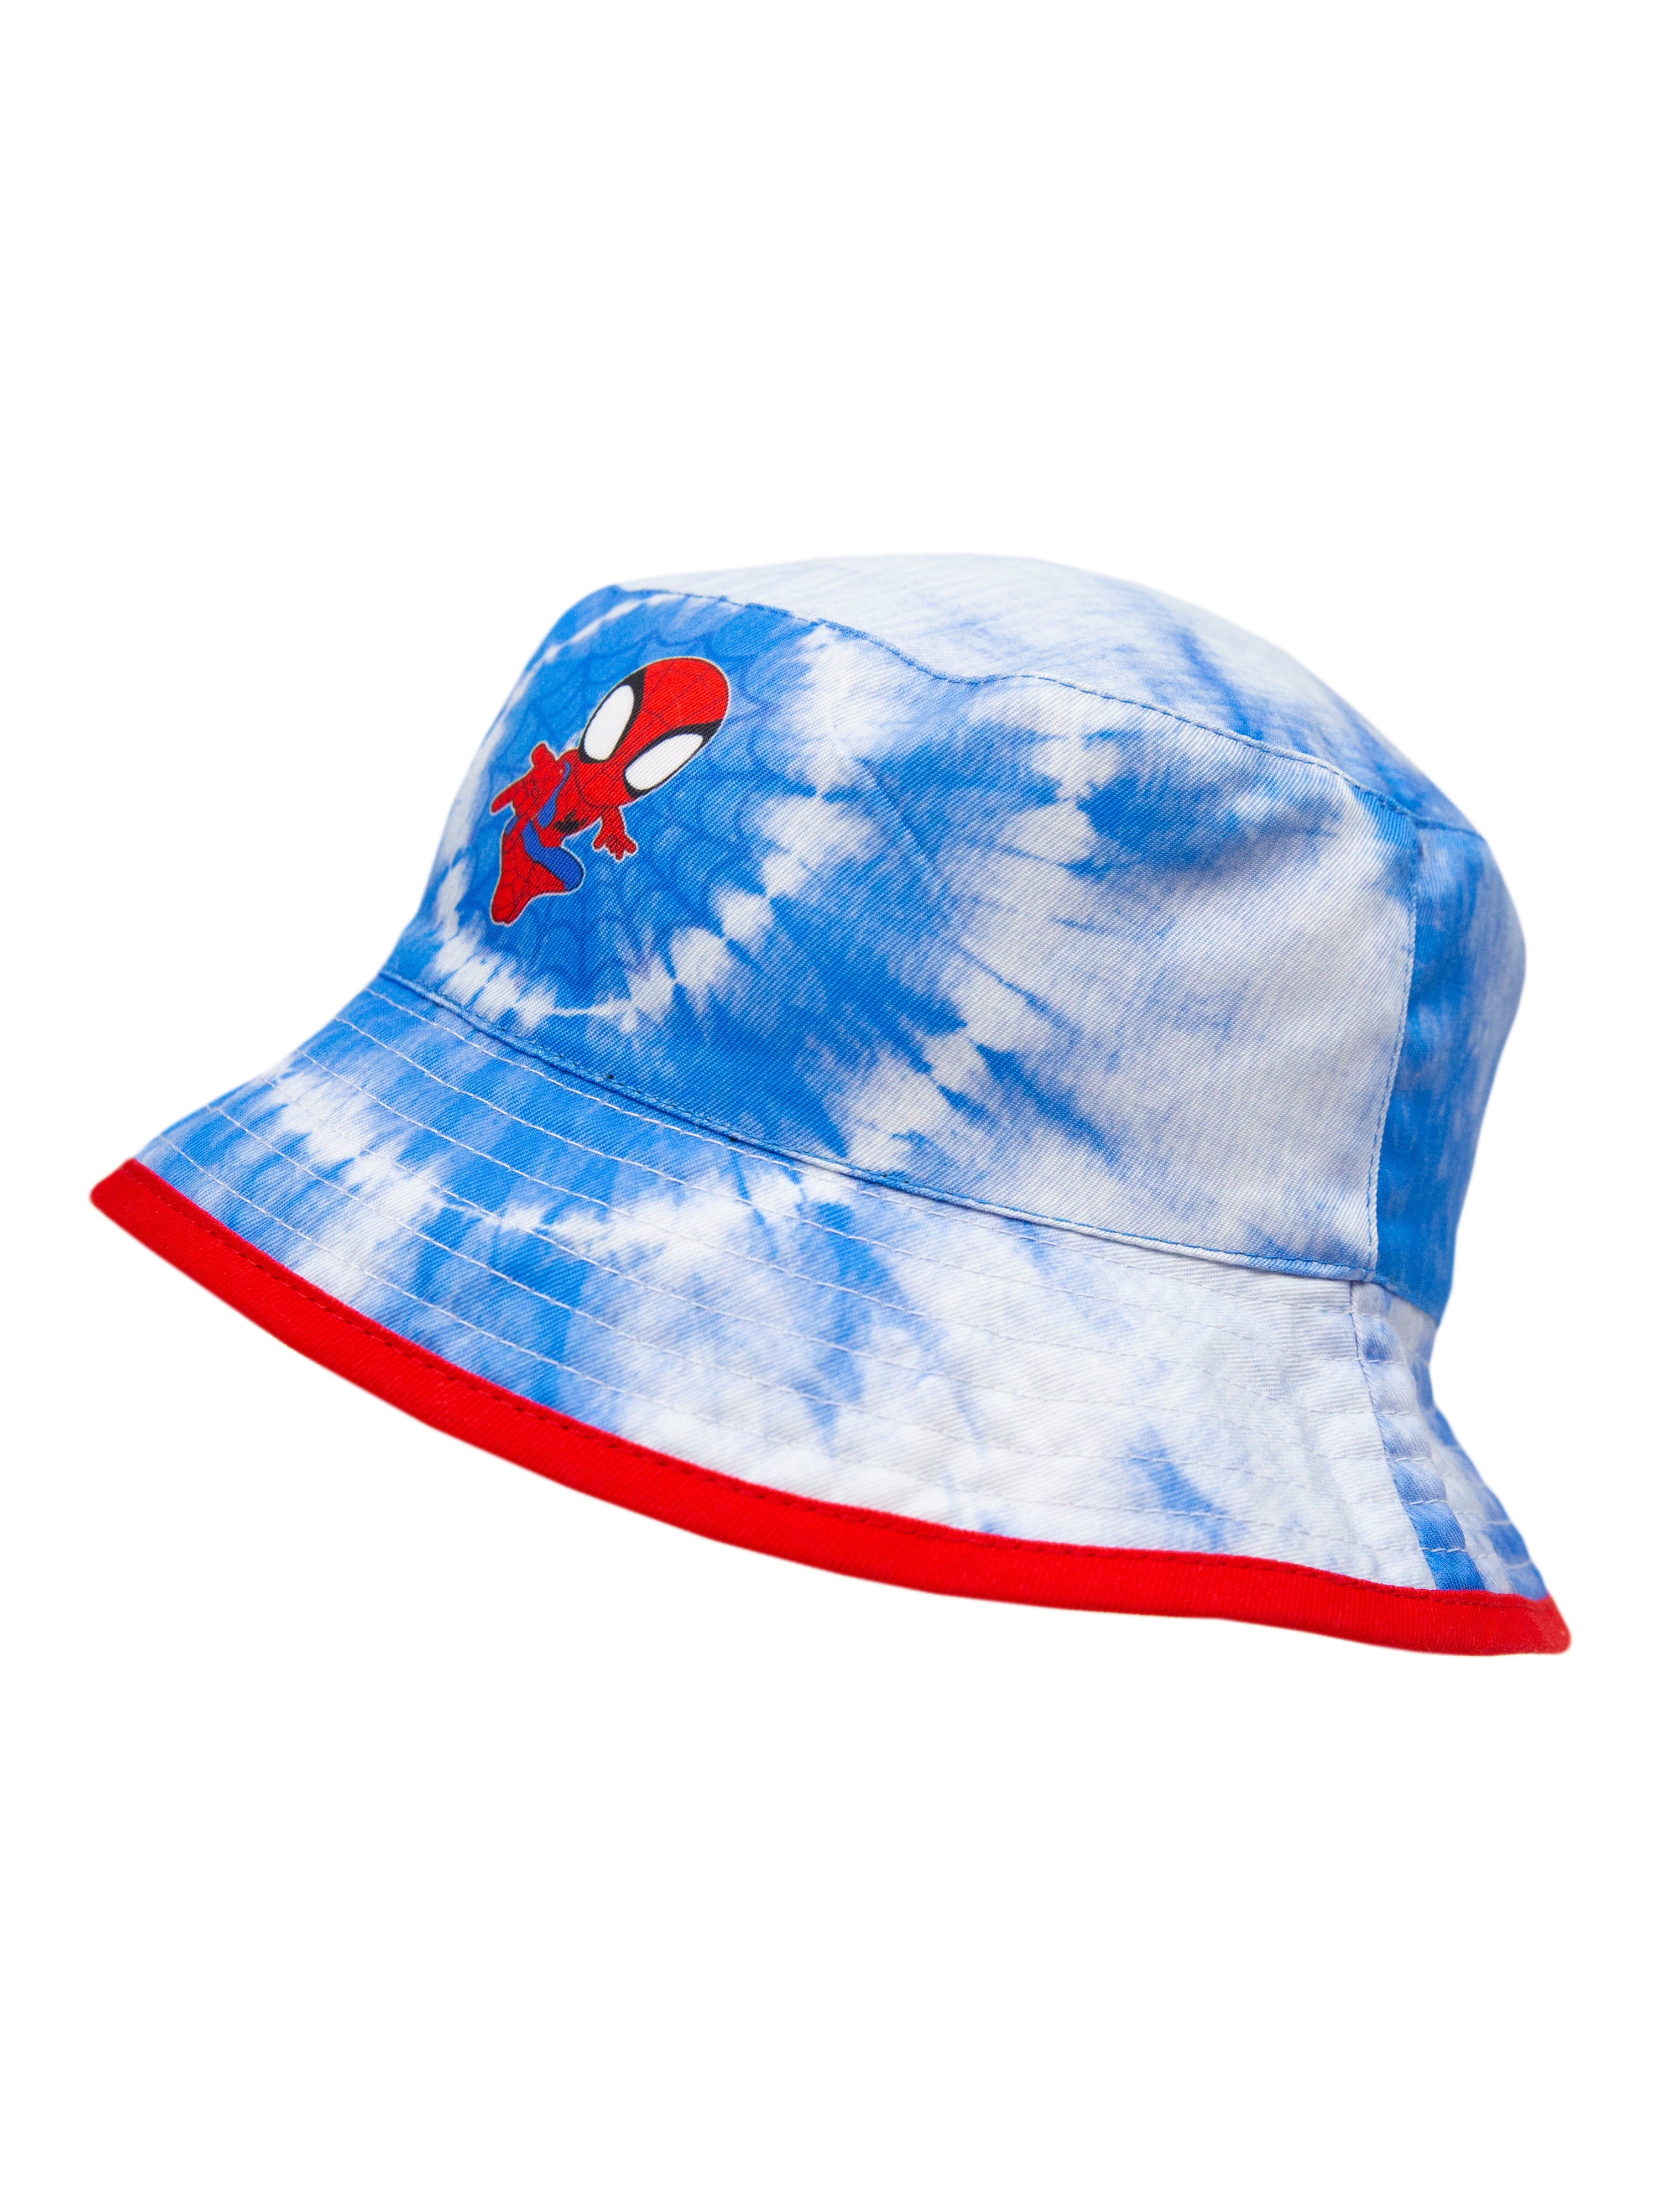 FOFJR Children Spiderman Hat Toddler Boys Girls Travel Beach Sun Hat Bucket Hat for Kid 2-5Years 